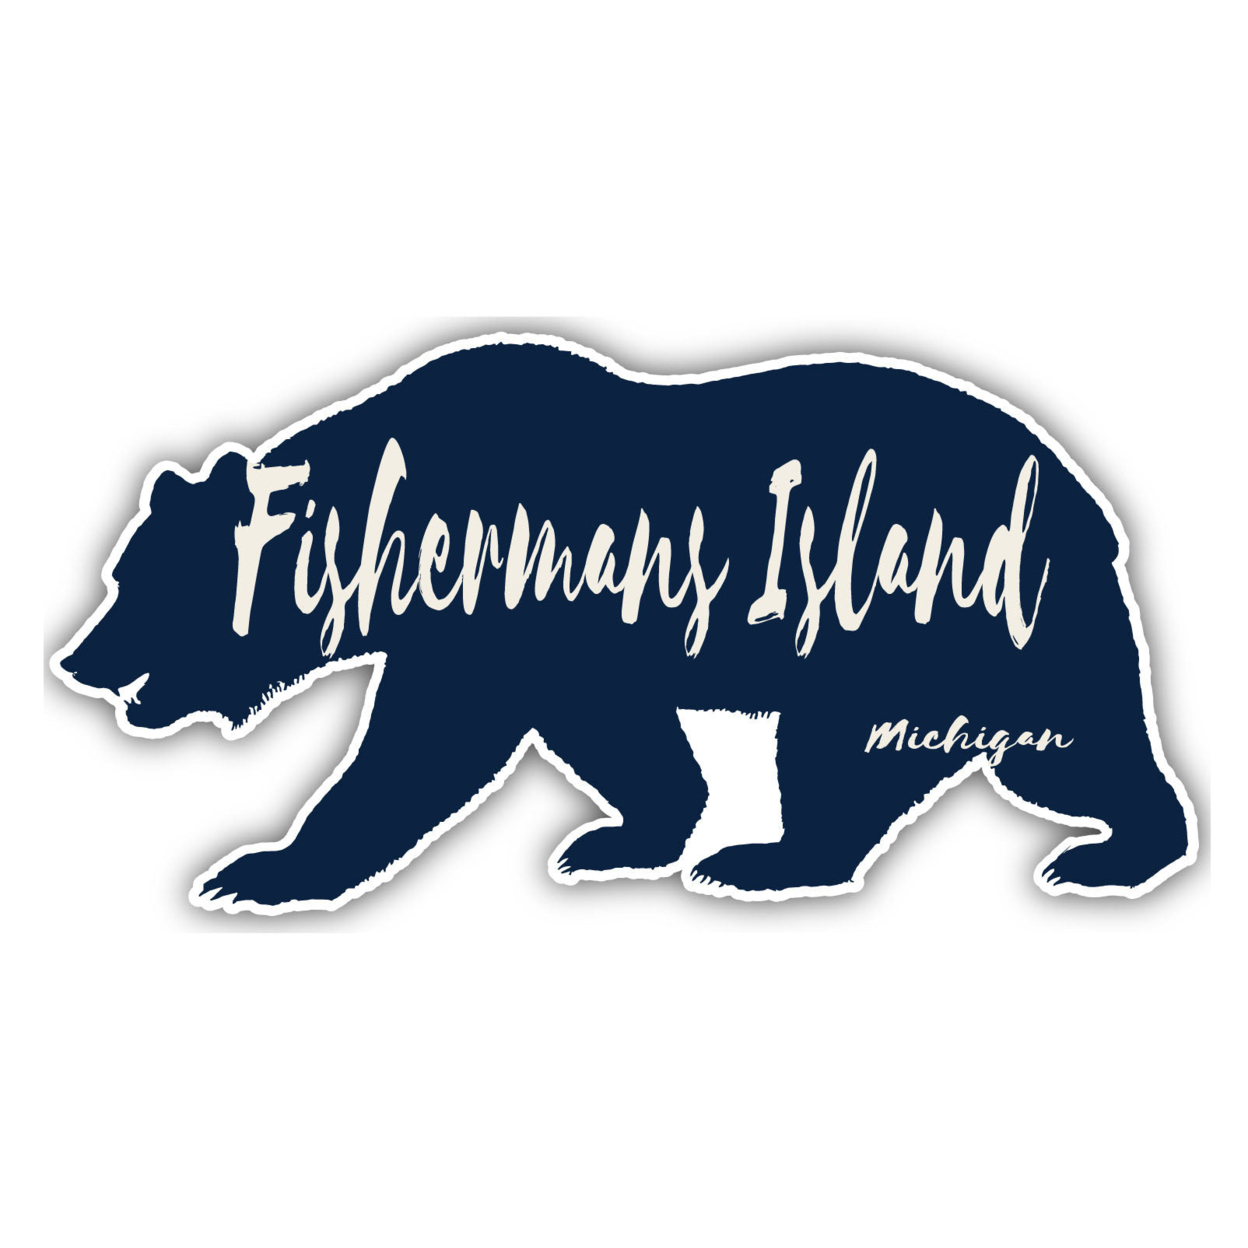 Fishermans Island Michigan Souvenir Decorative Stickers (Choose Theme And Size) - Single Unit, 12-Inch, Bear